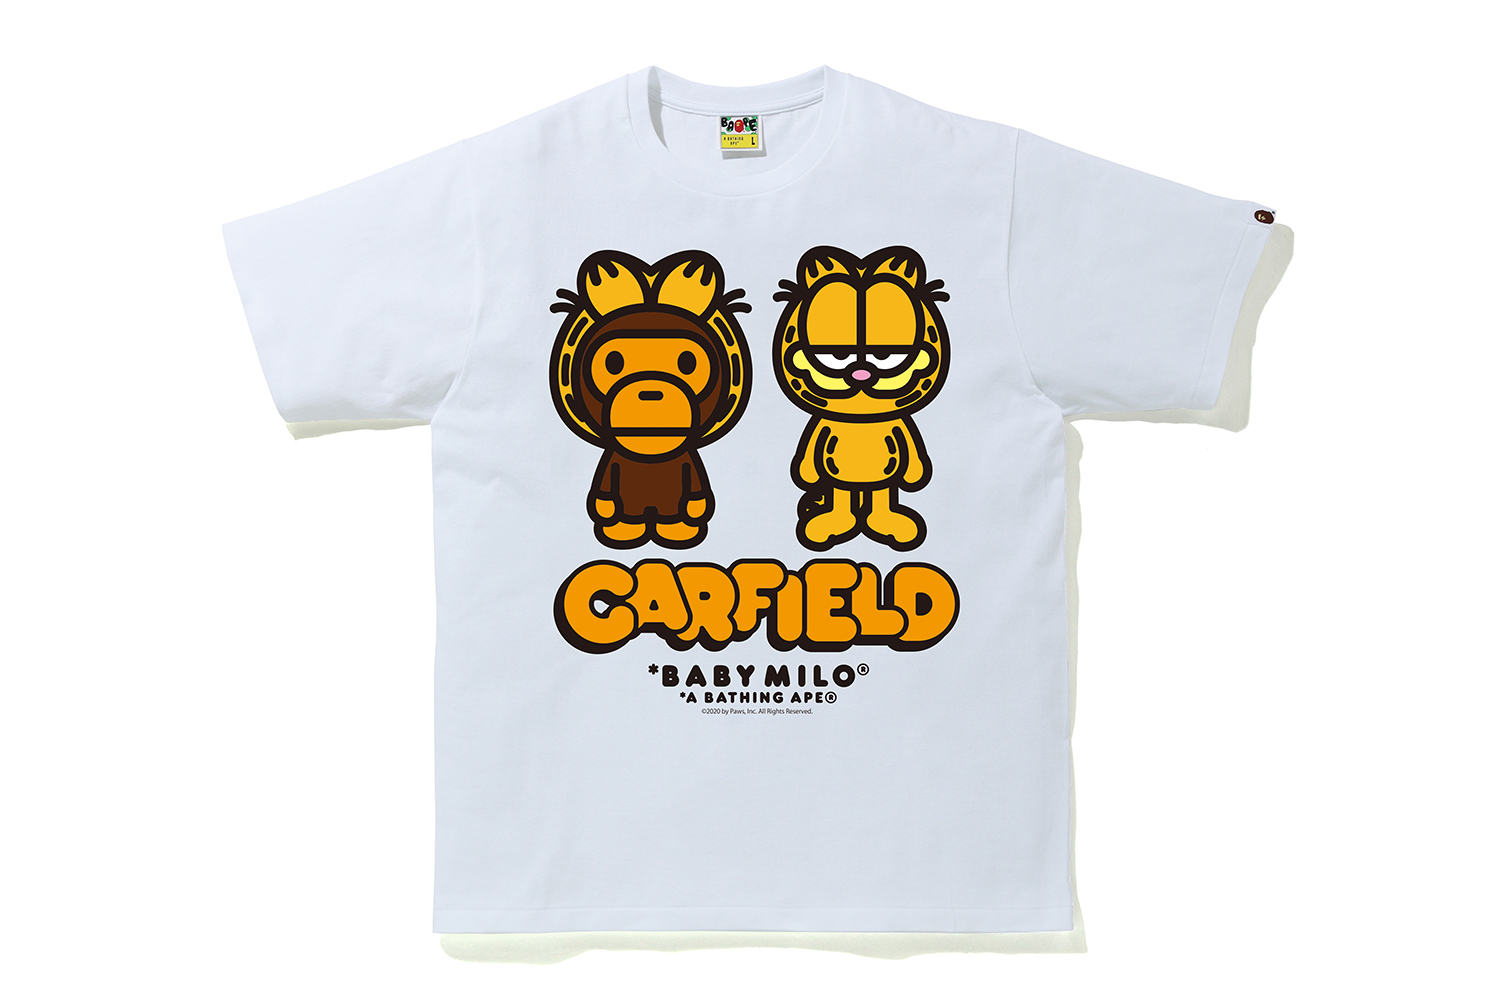 A Bathing Ape 世界で一番有名なネコ ガーフィールドとコラボ Tシャツやキャップなど発売 Emo Miu エモミュー